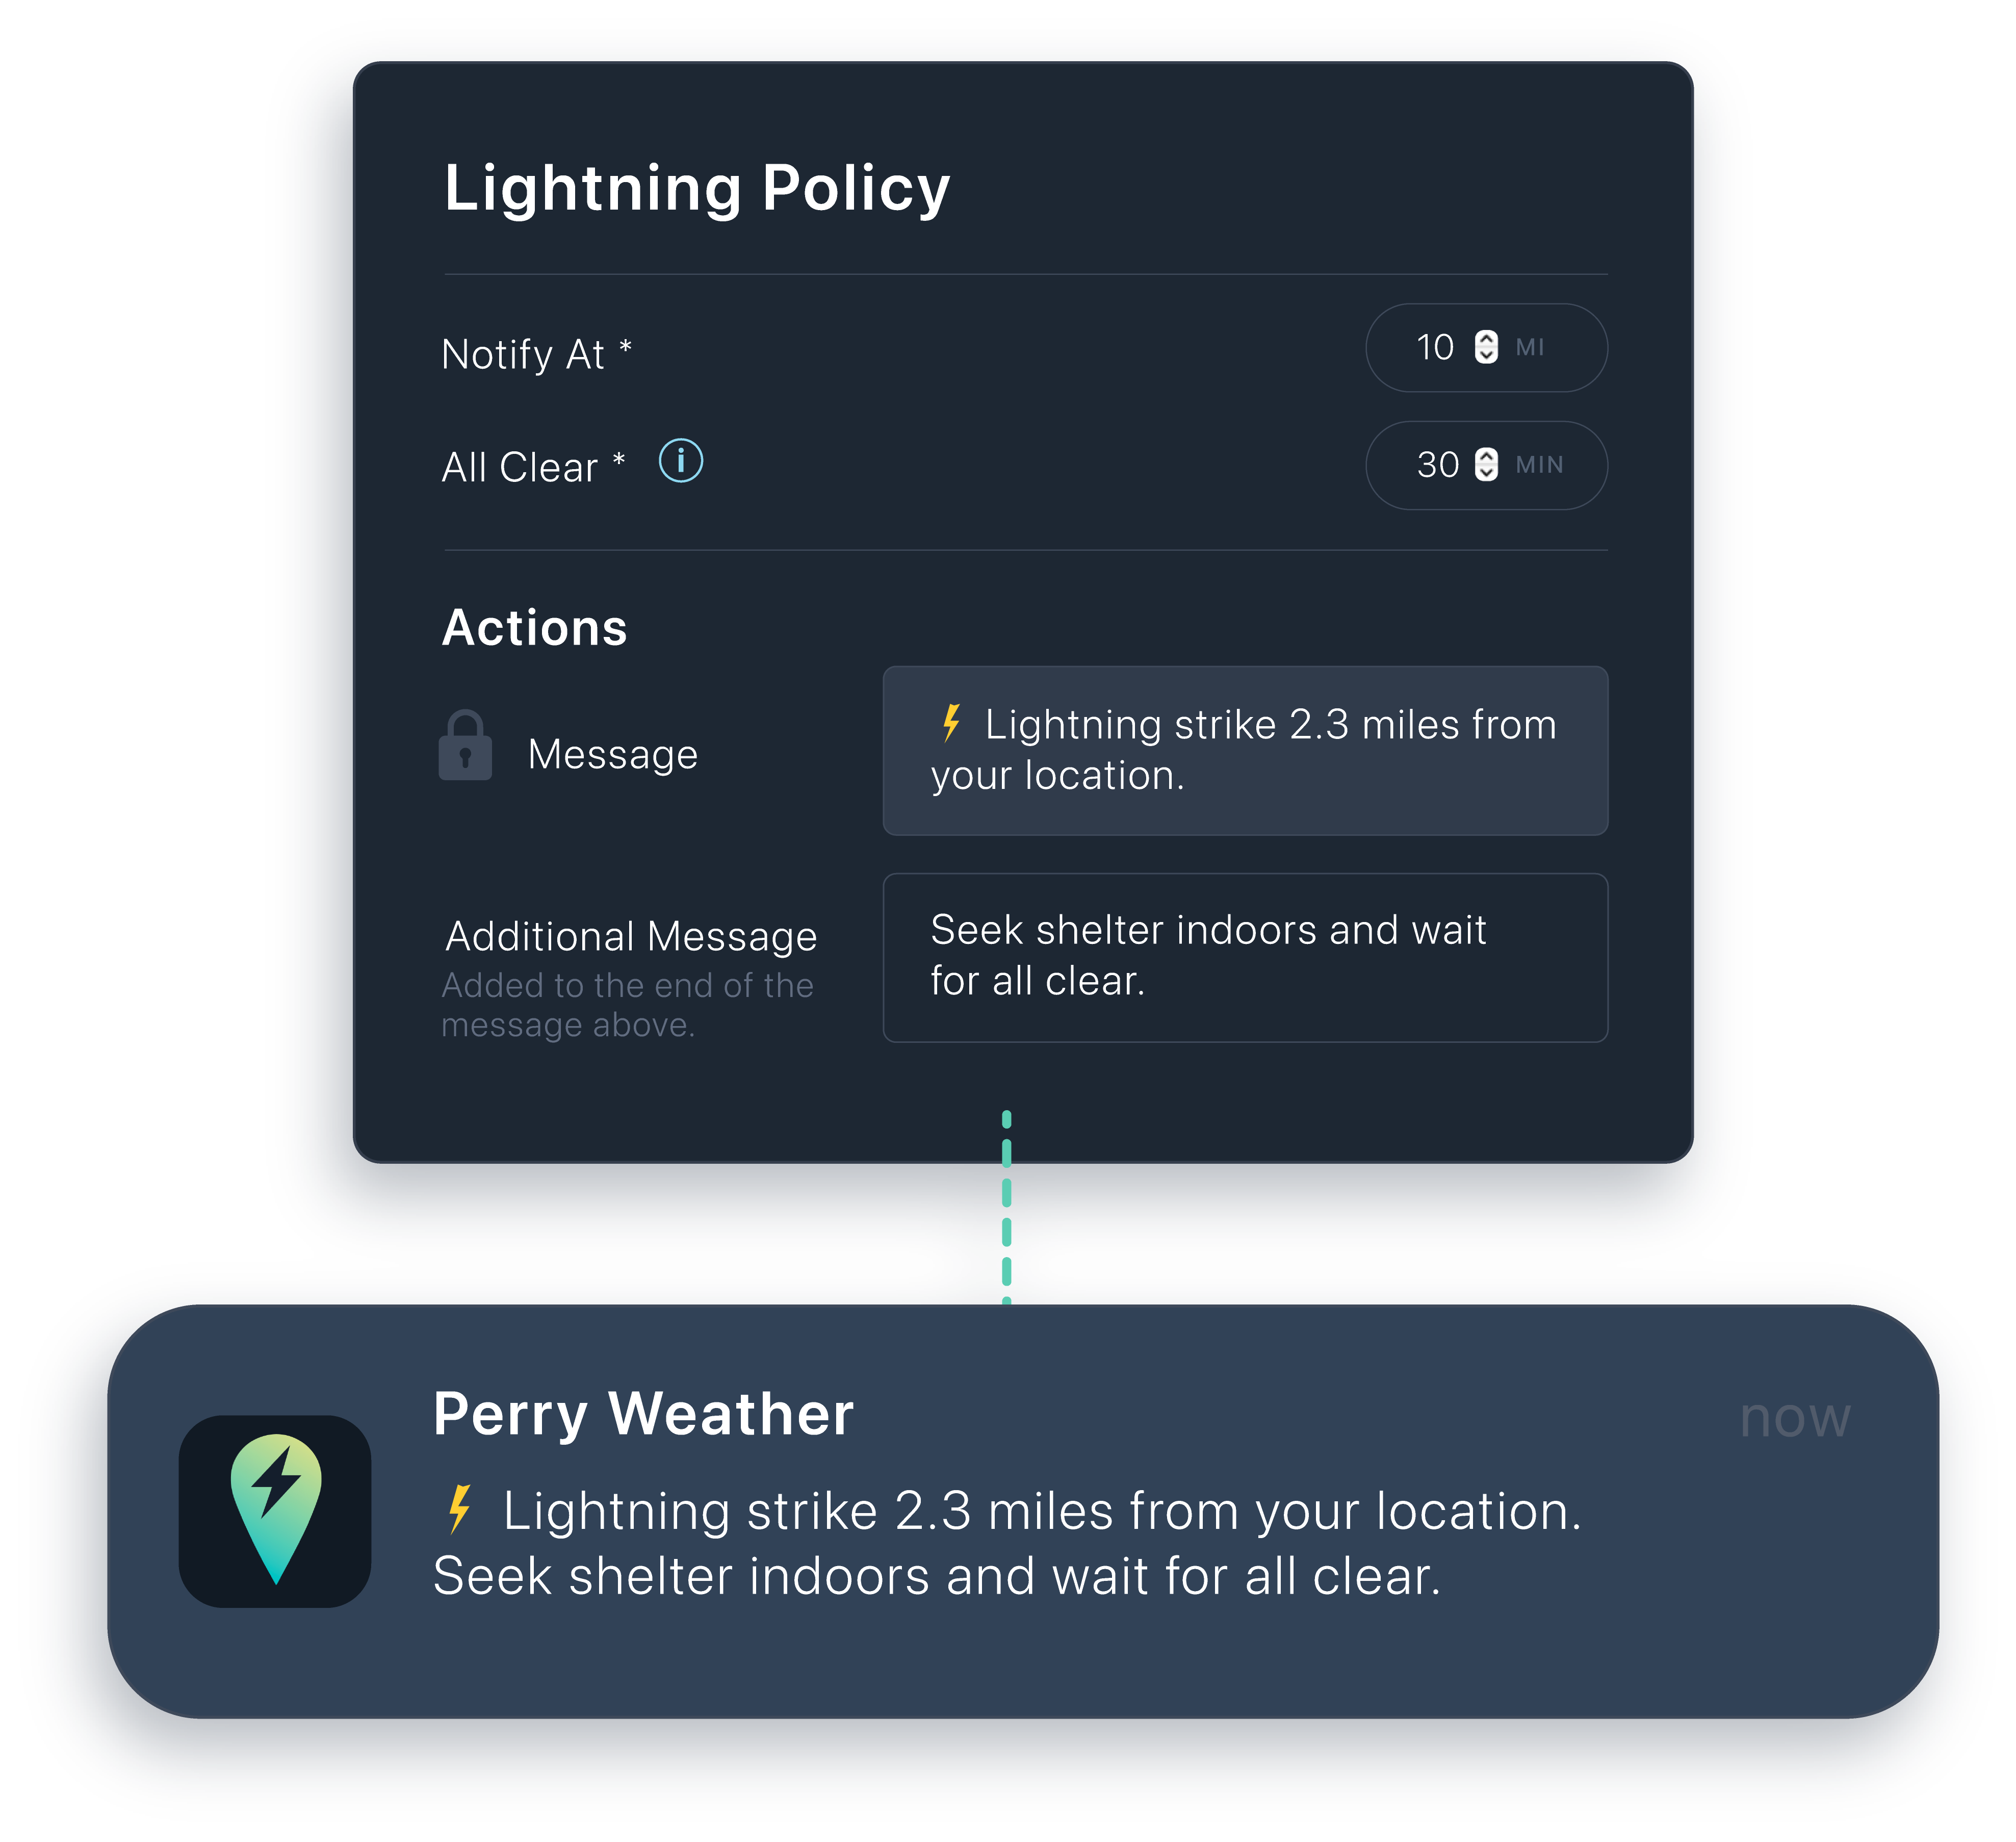 Lightning Policy Warning Setup